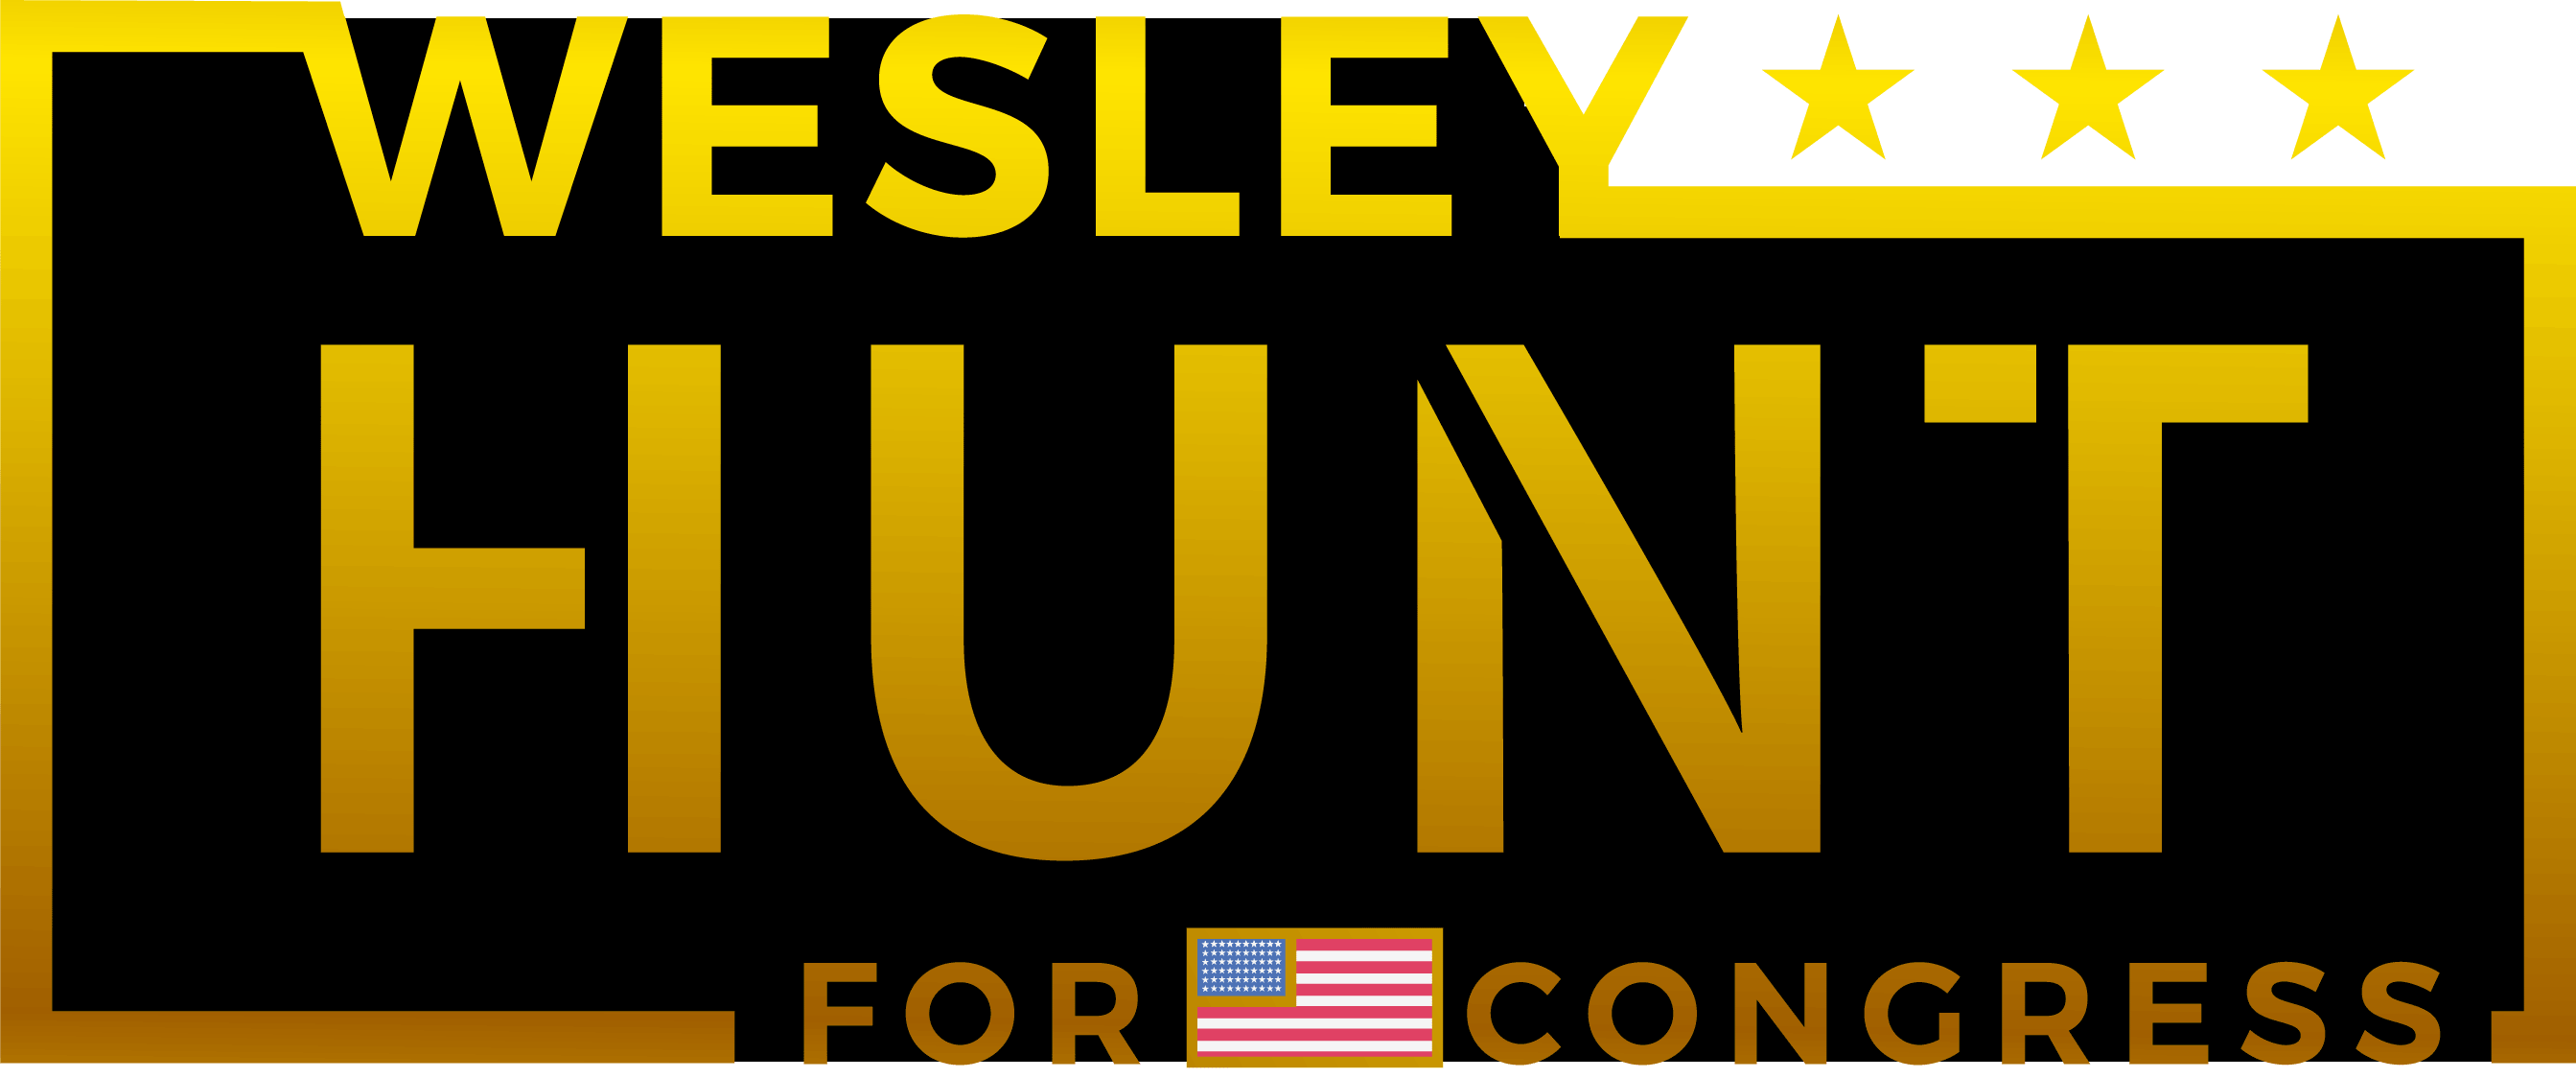 Wesley Hunt For Congress